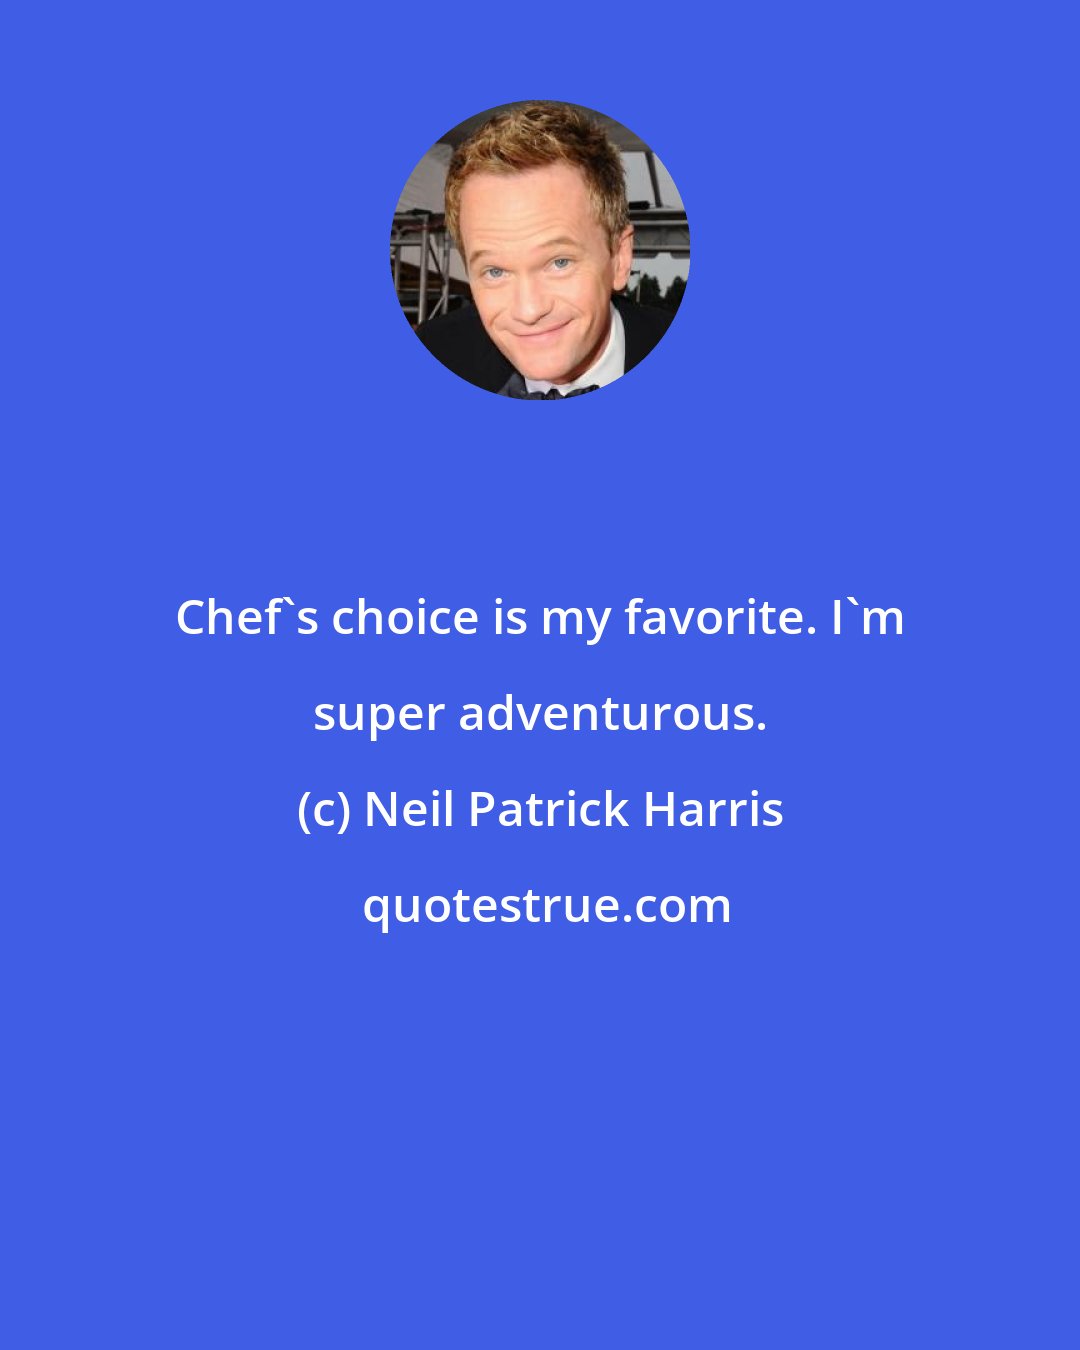 Neil Patrick Harris: Chef's choice is my favorite. I'm super adventurous.